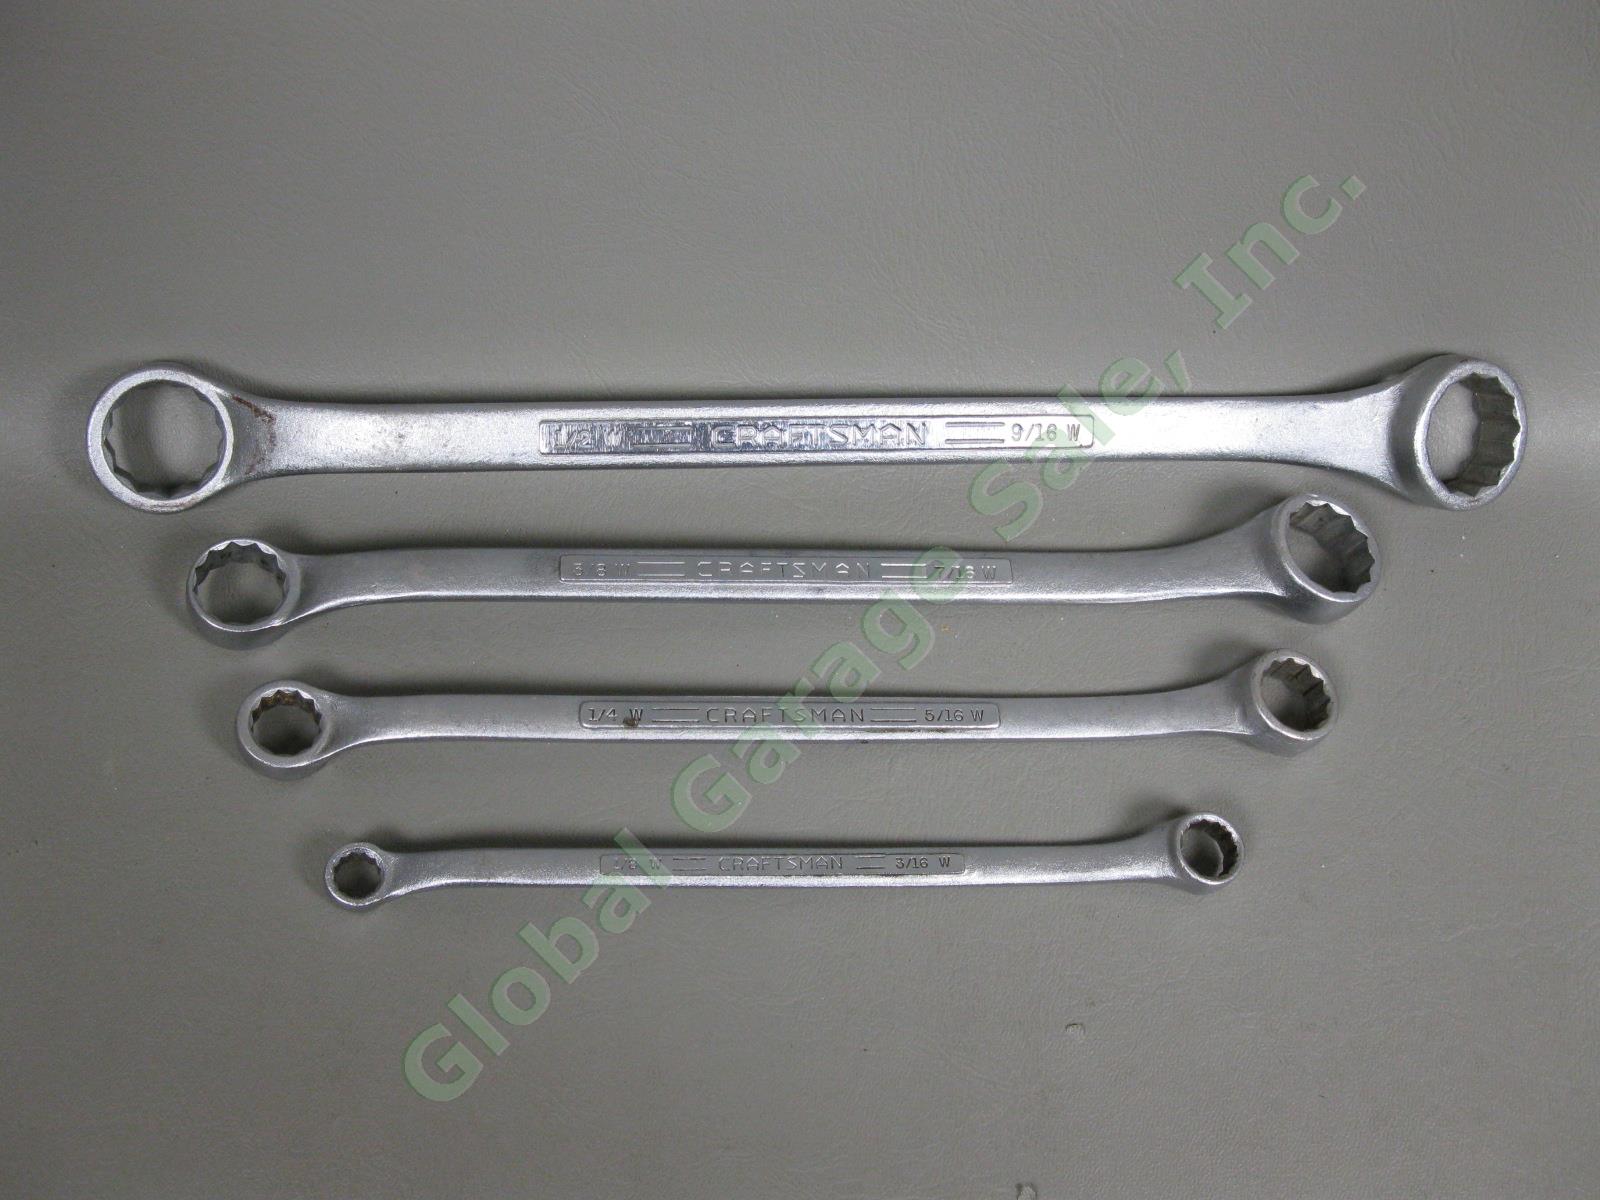 Craftsman British Standard Whitworth Box End 4 Wrench Set 4296 V 8 Size 1/8-9/16